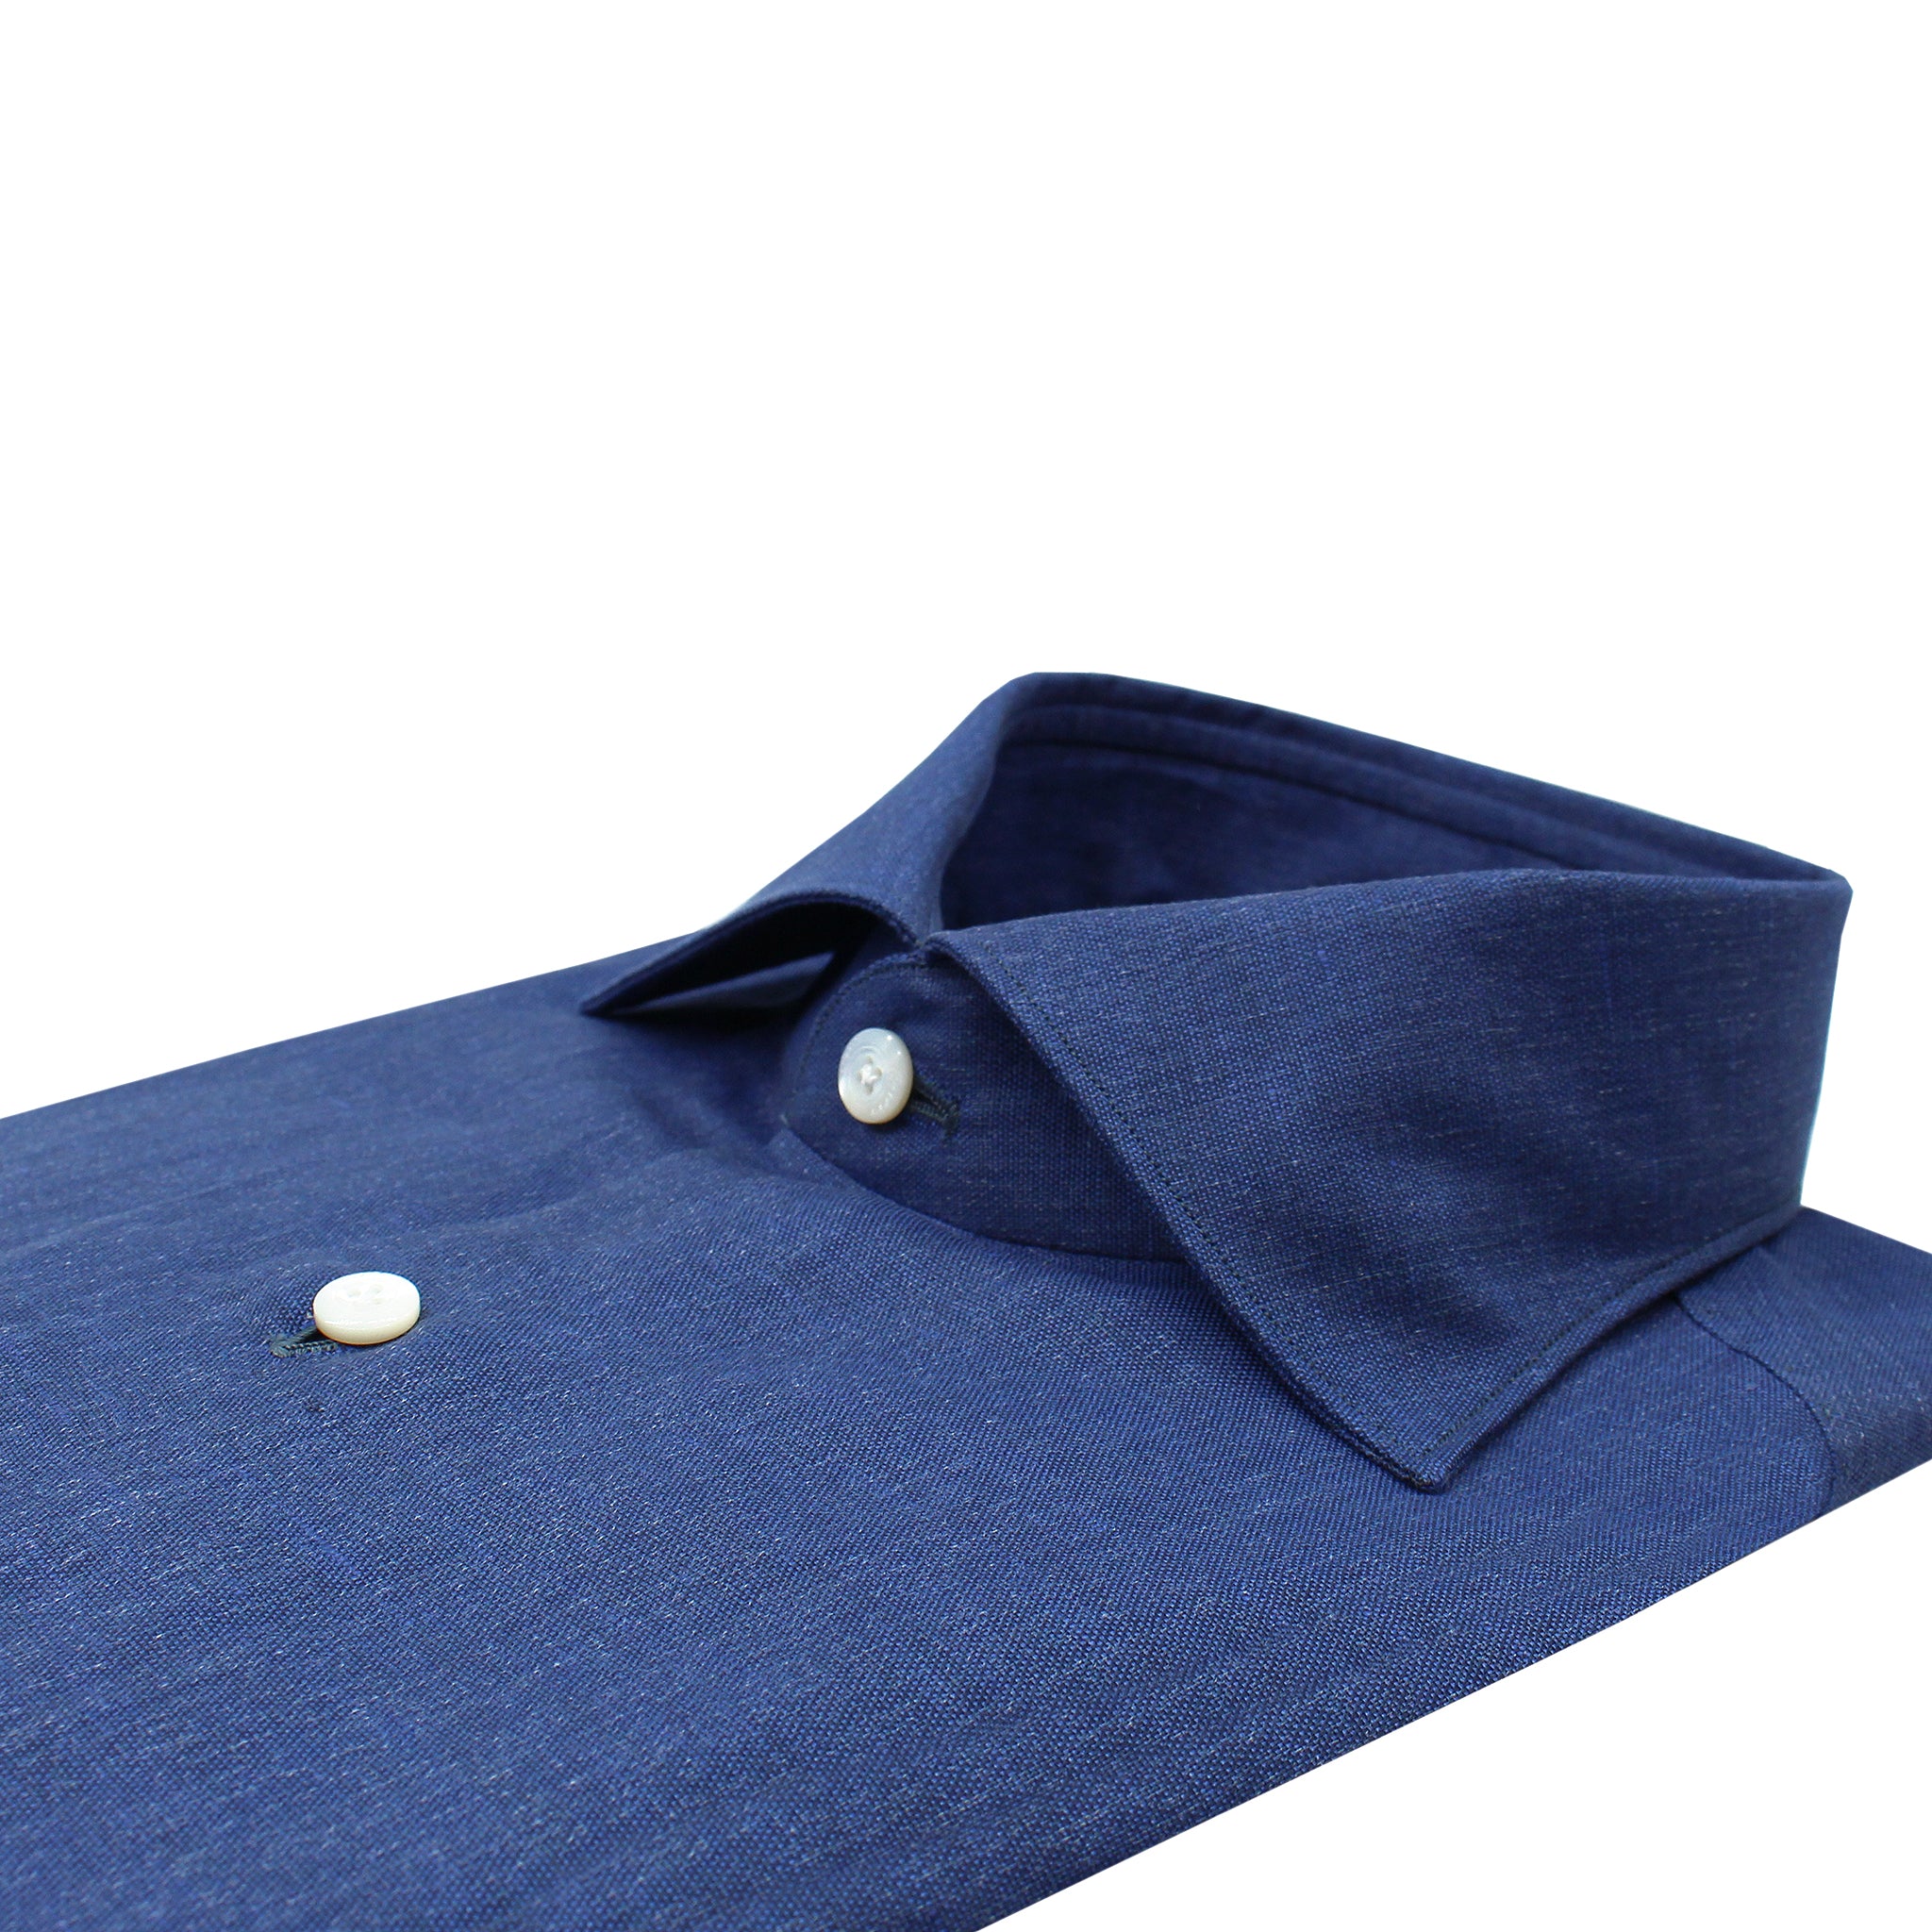 Classic MILANO slim fit linen and cotton blue shirt Carlo Riva